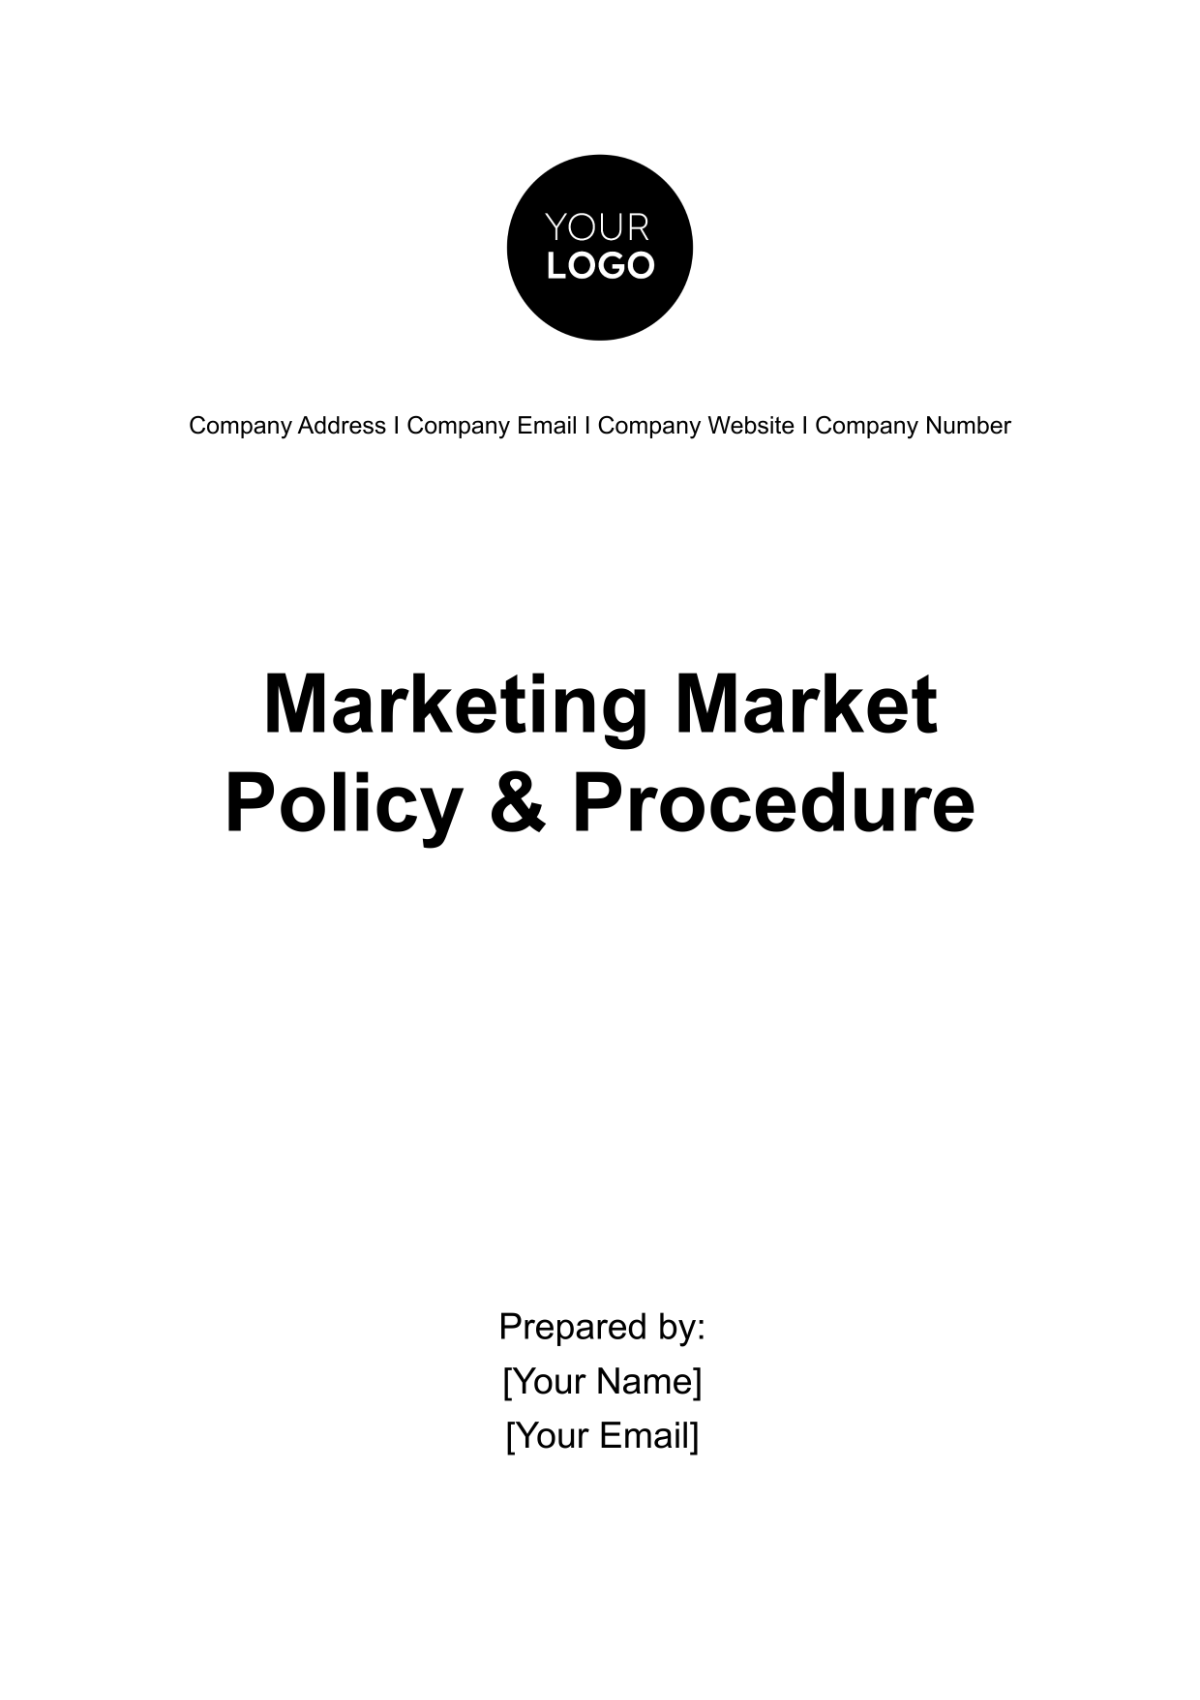 Marketing Market Policy & Procedure Template